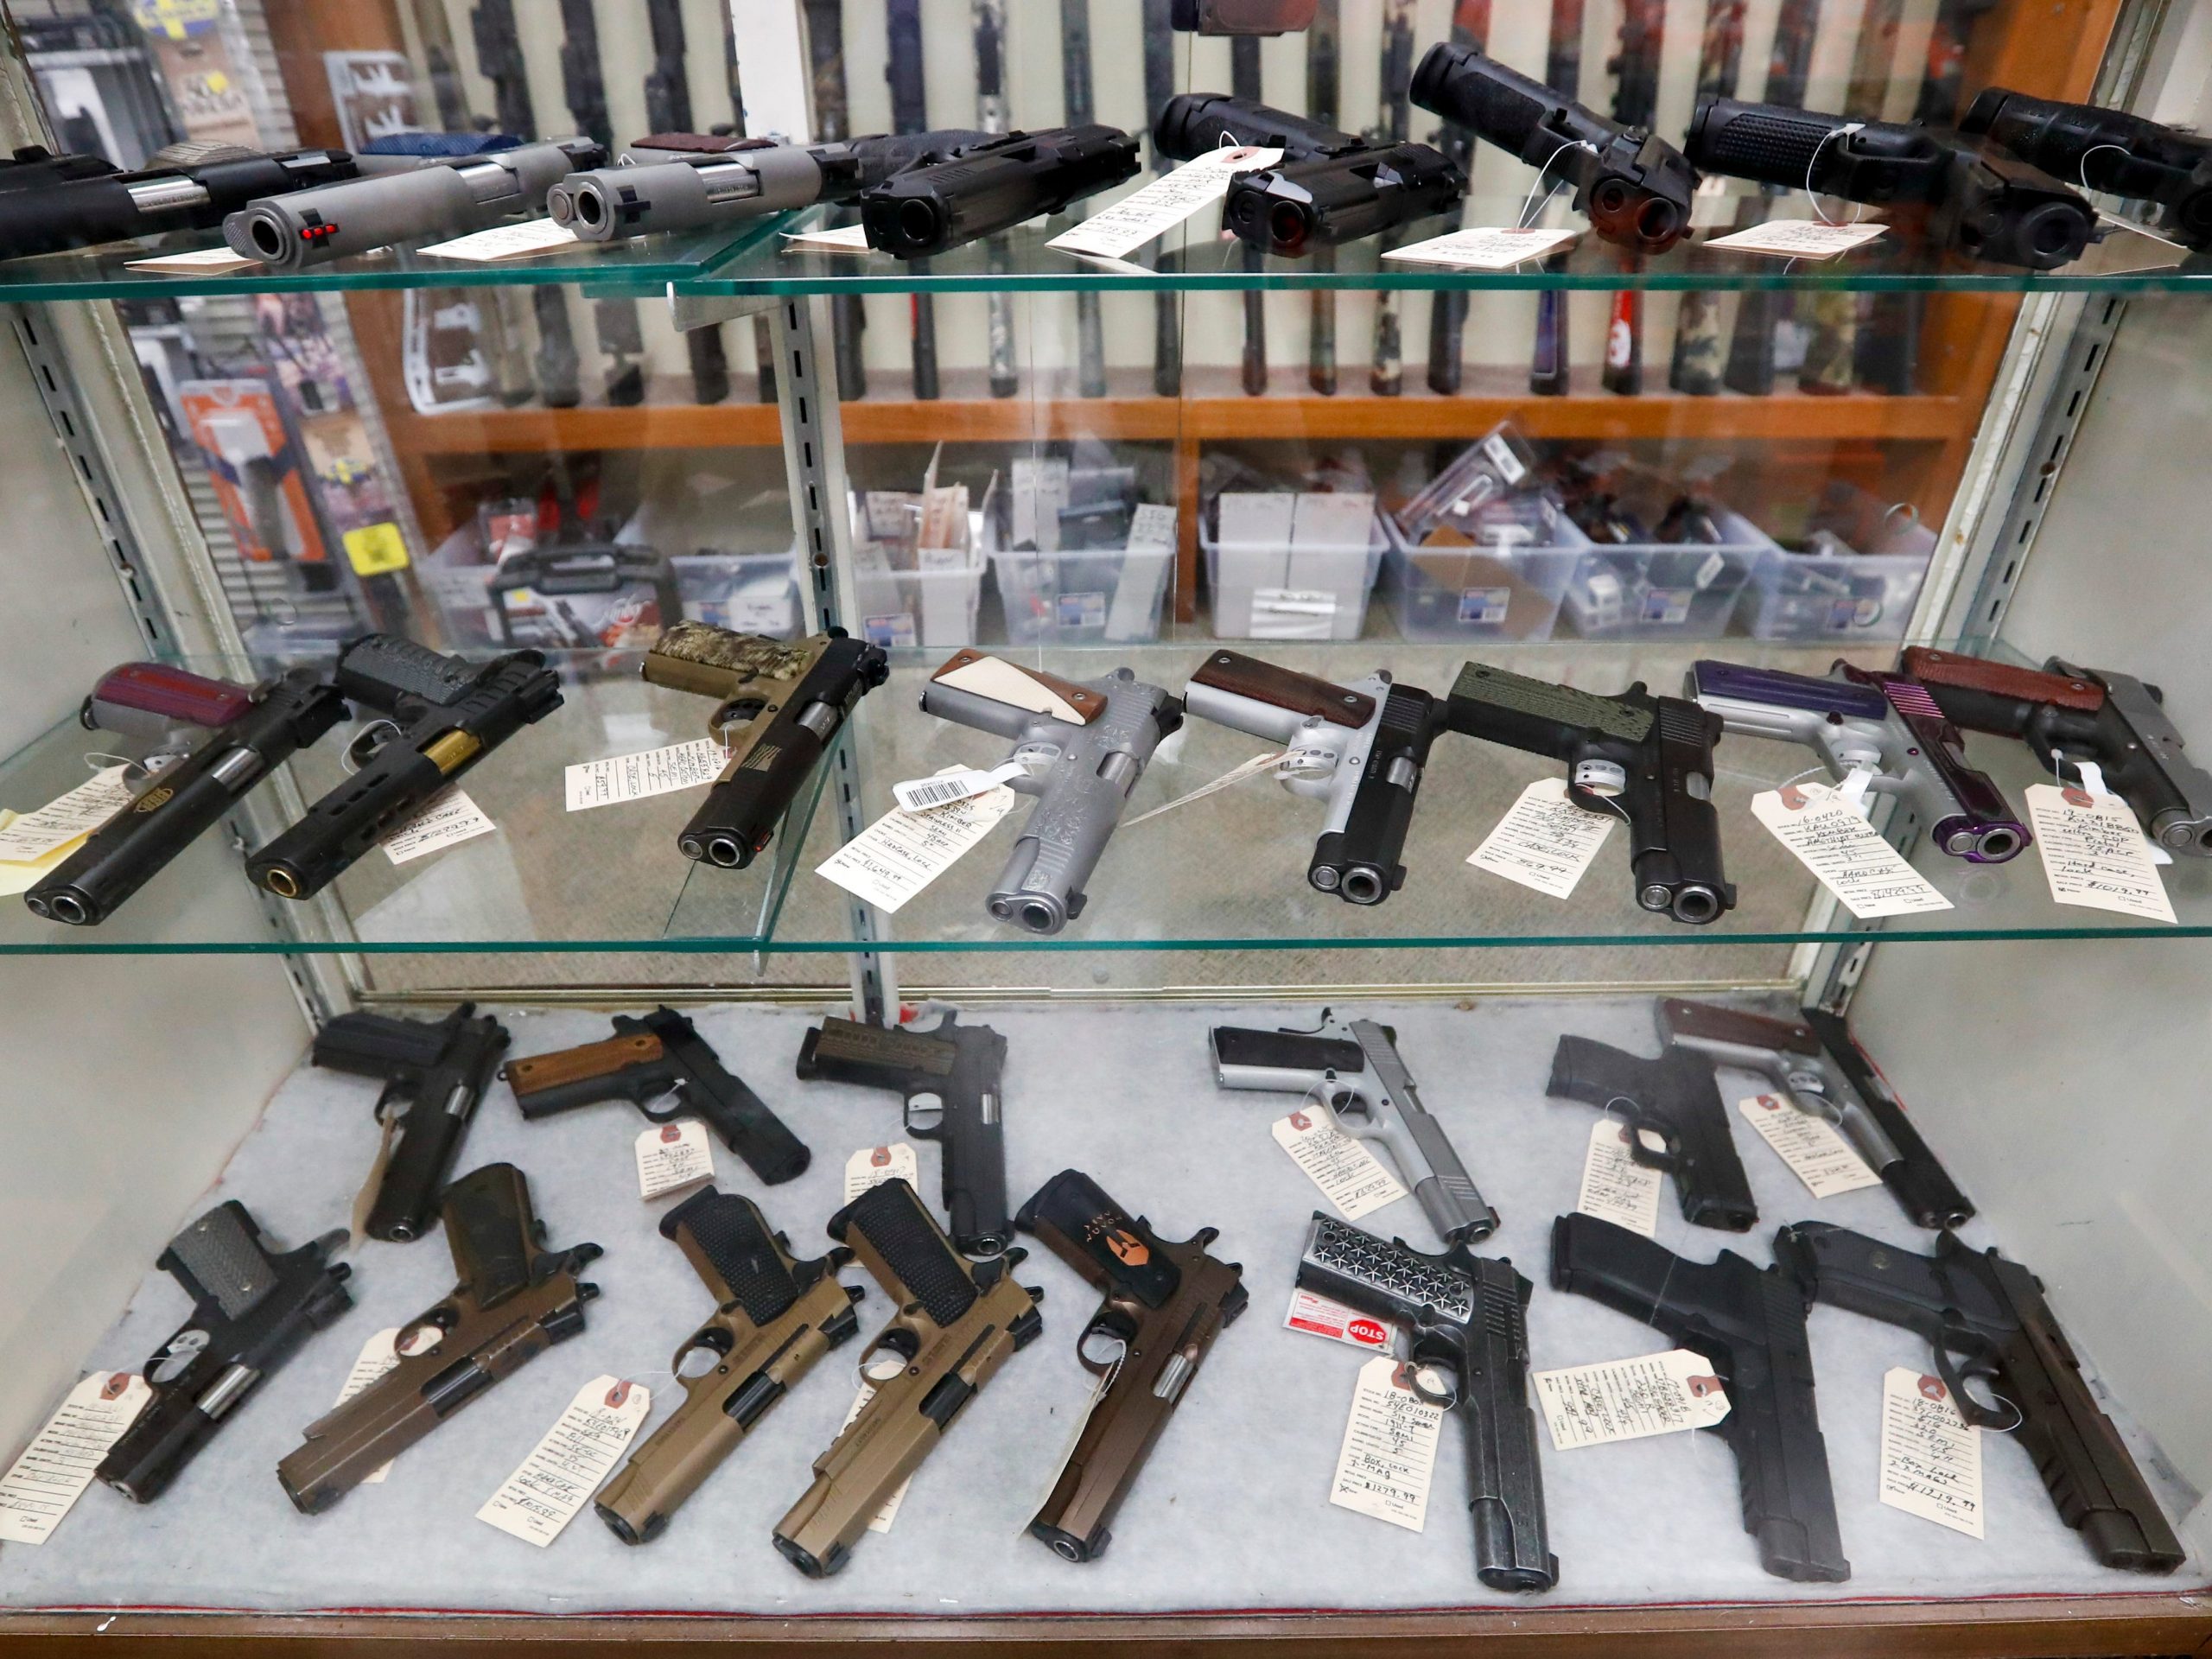 Semi-automatic handguns are displayed at shop.